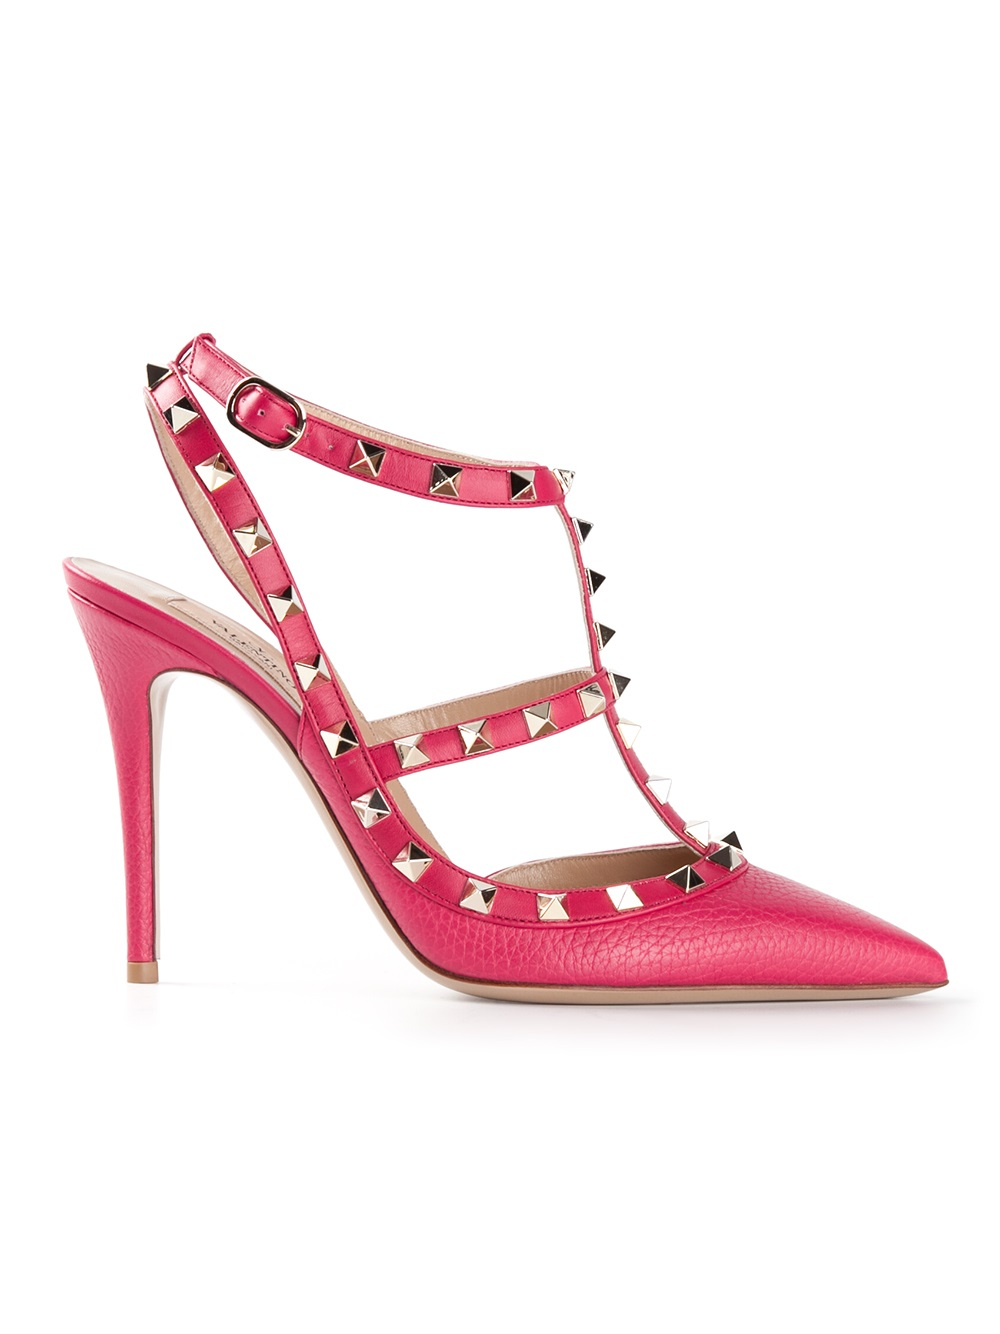 Buy > valentino pink rockstud pumps > in stock